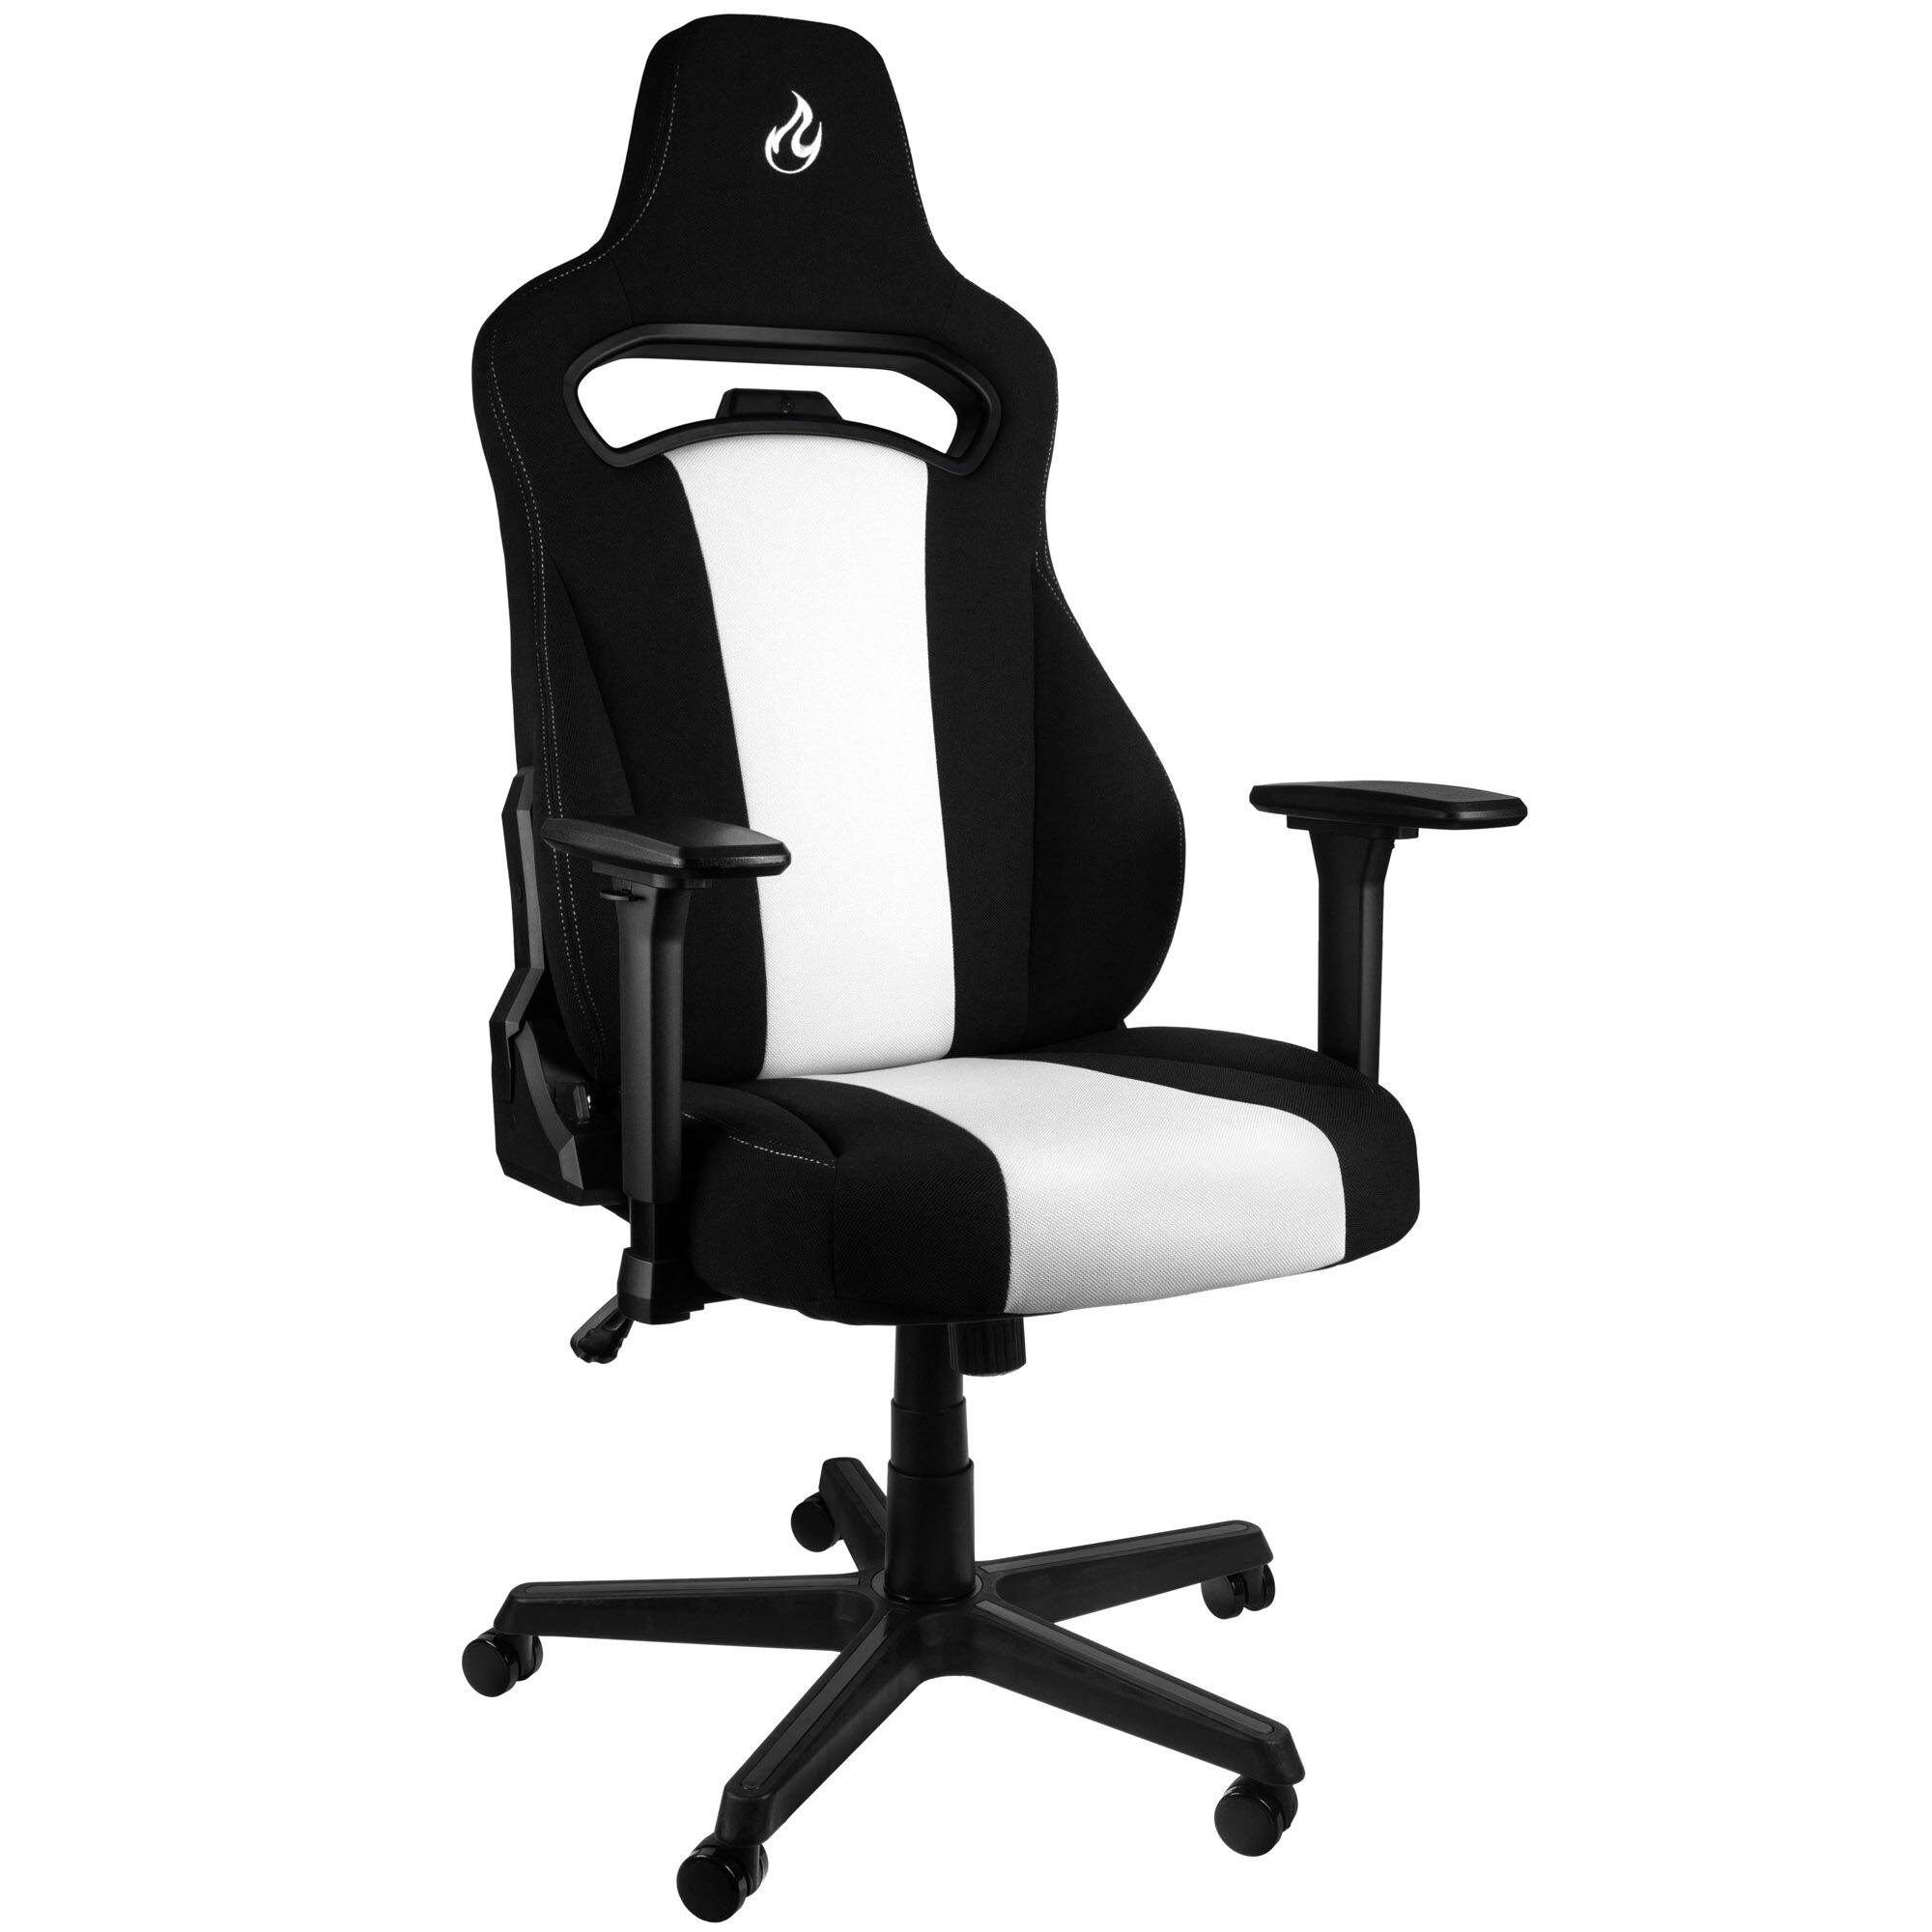 Nitro Concepts E250 Gaming Chair - black/white